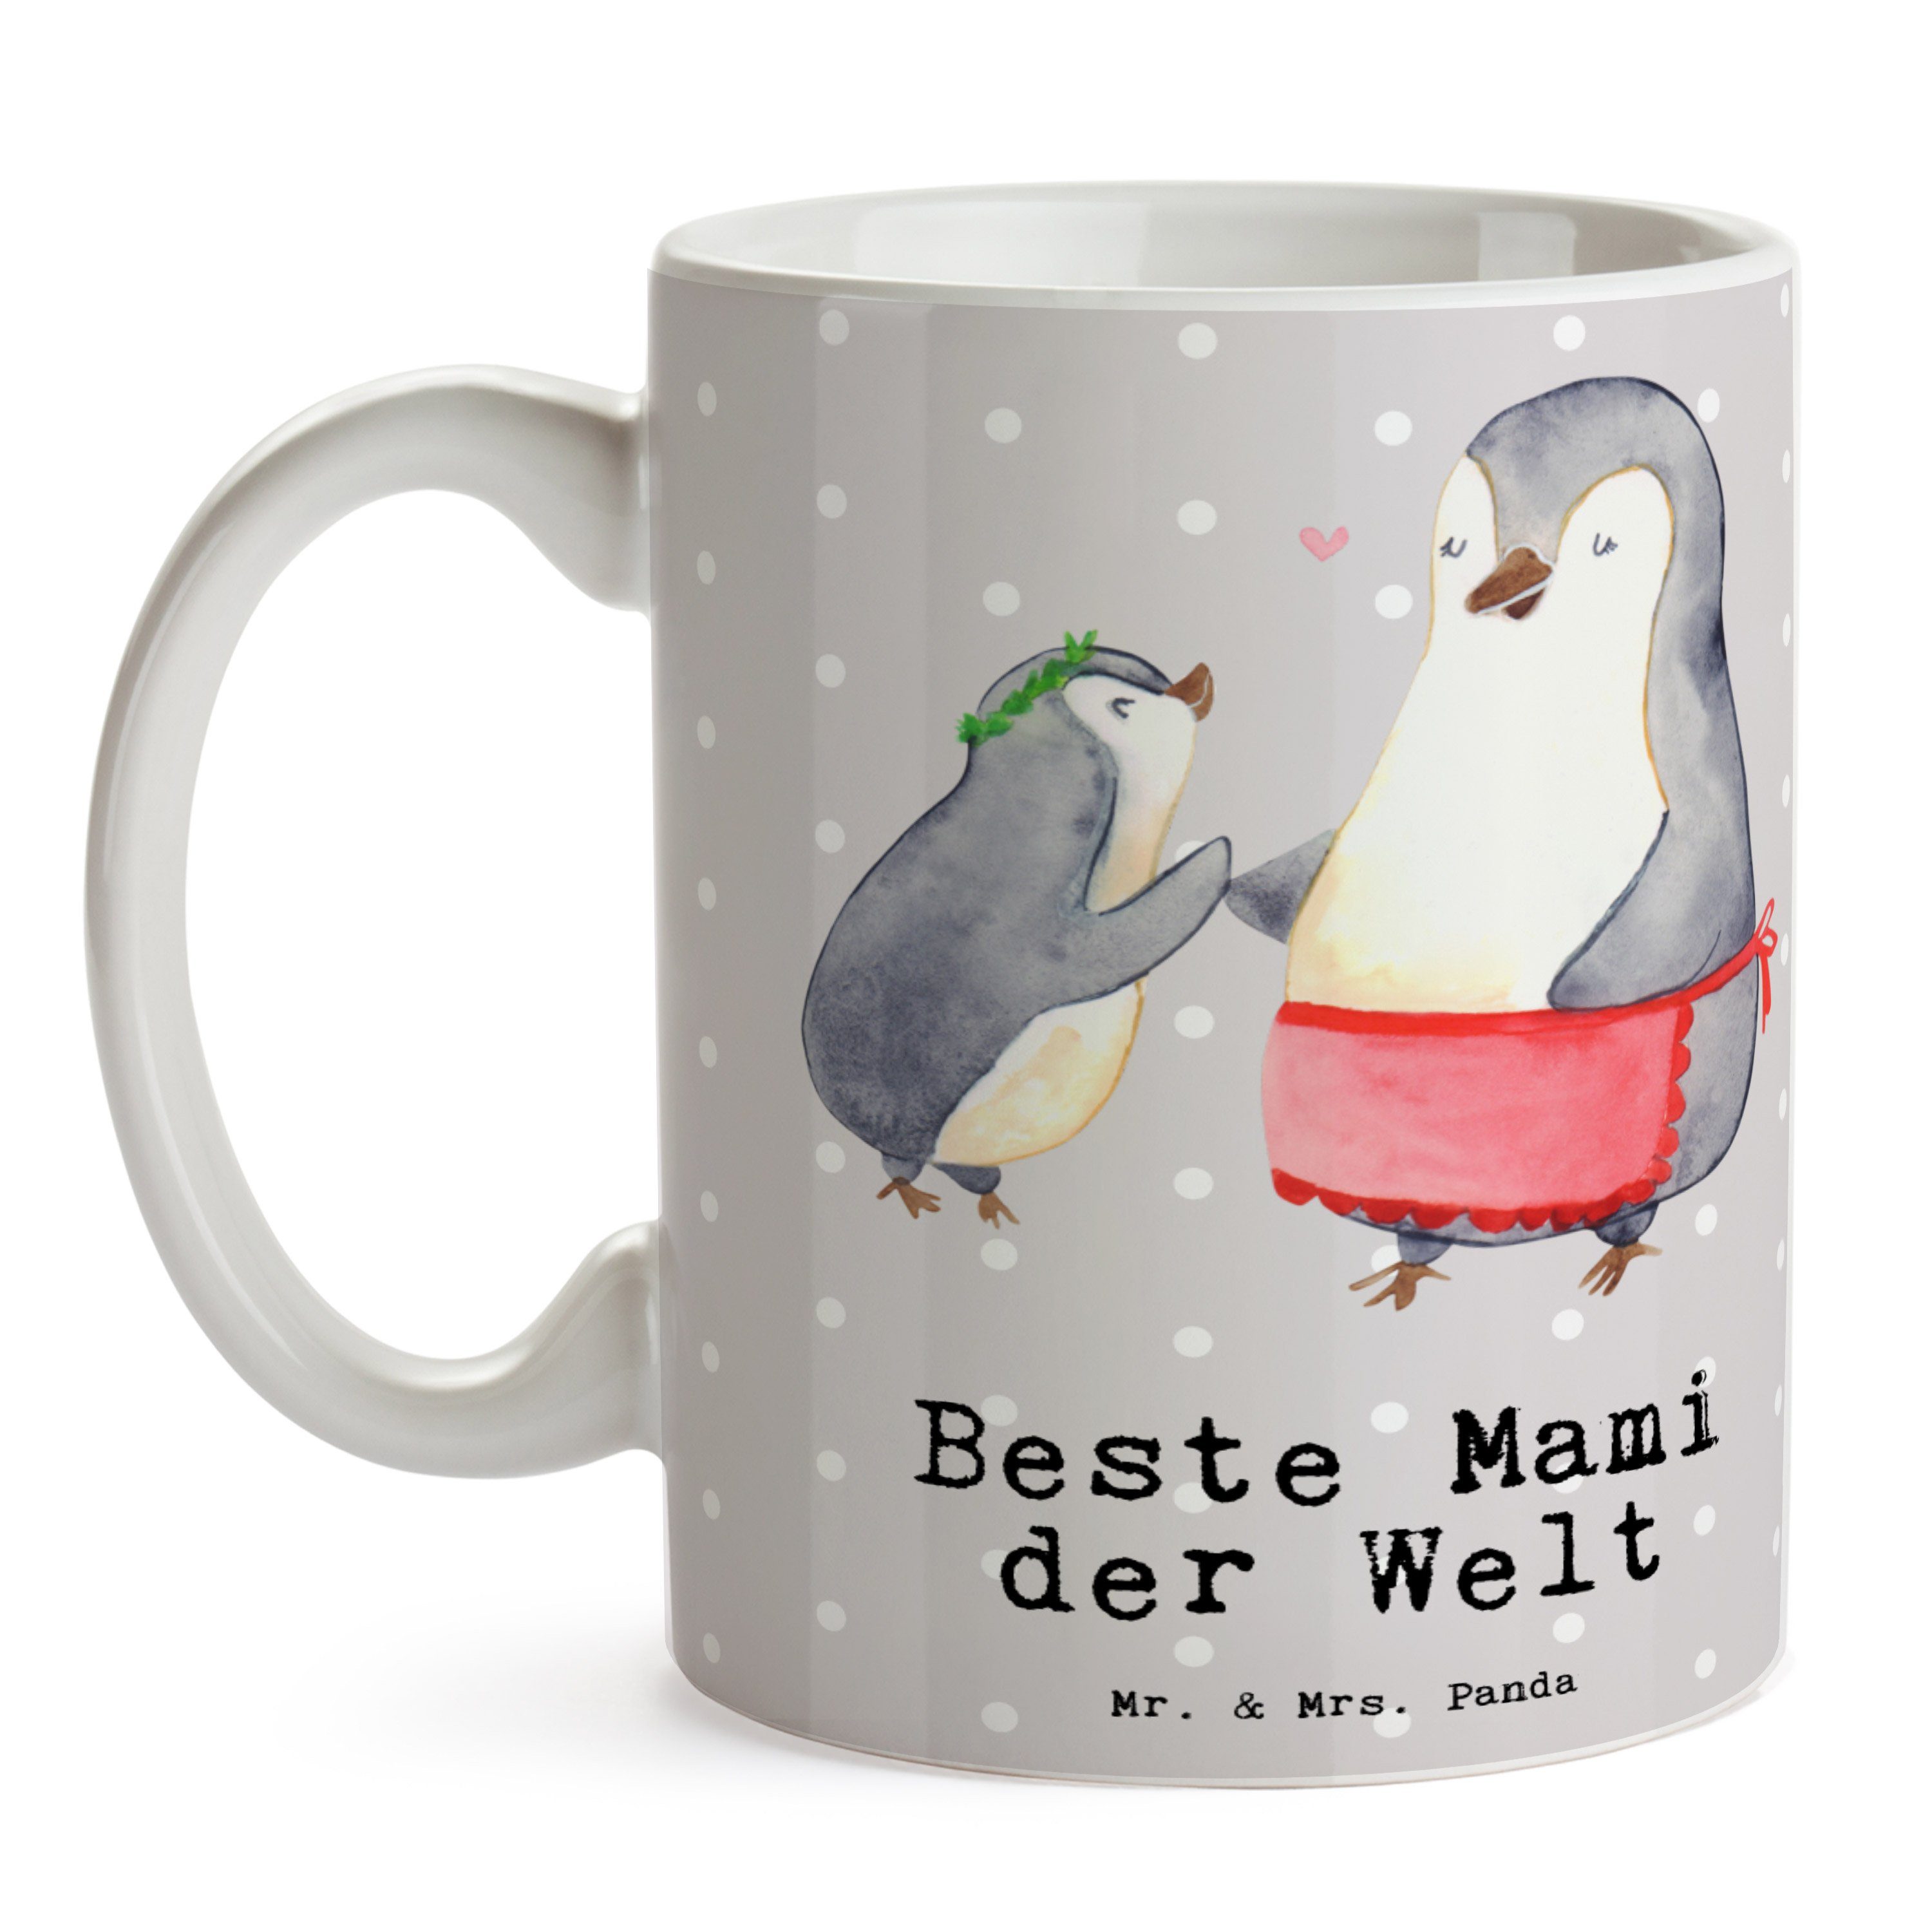 Keramik Geschenk, - Mami der - Mrs. Pinguin Beste Panda Keramiktasse, Tasse Mr. & Grau Pastell Welt